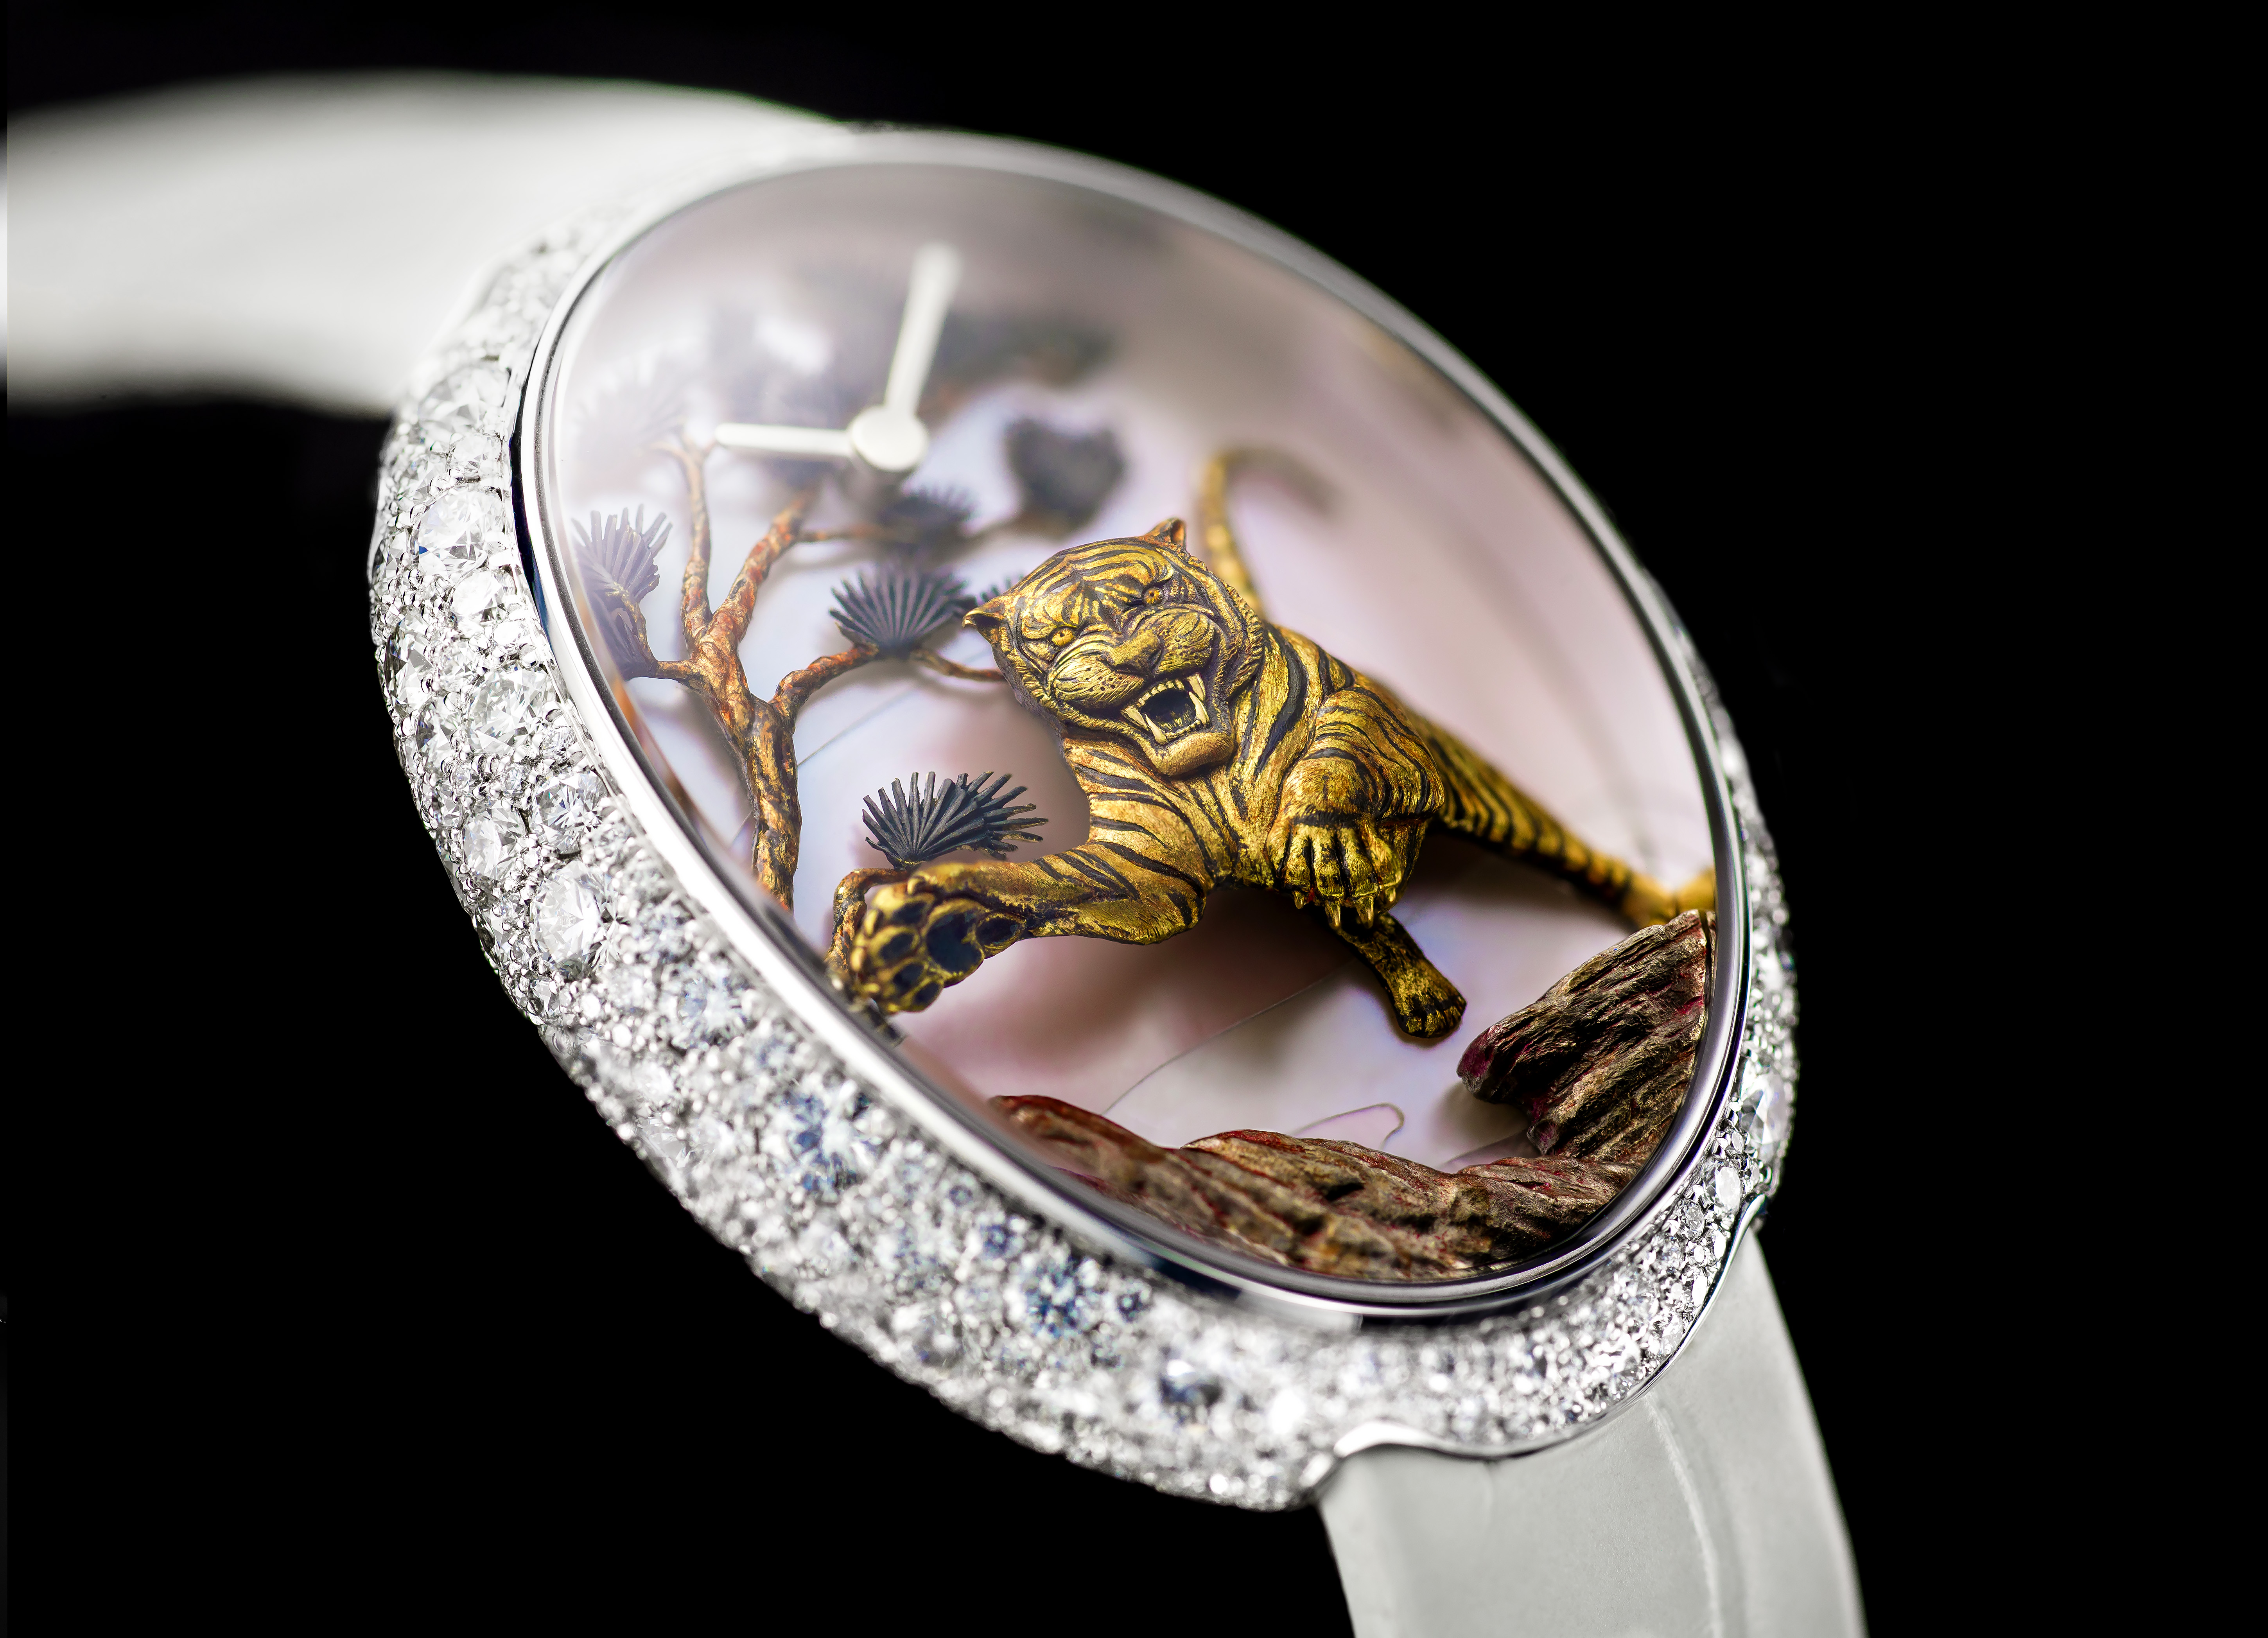 Van 'T Hoff Time of the Tiger Art Watch